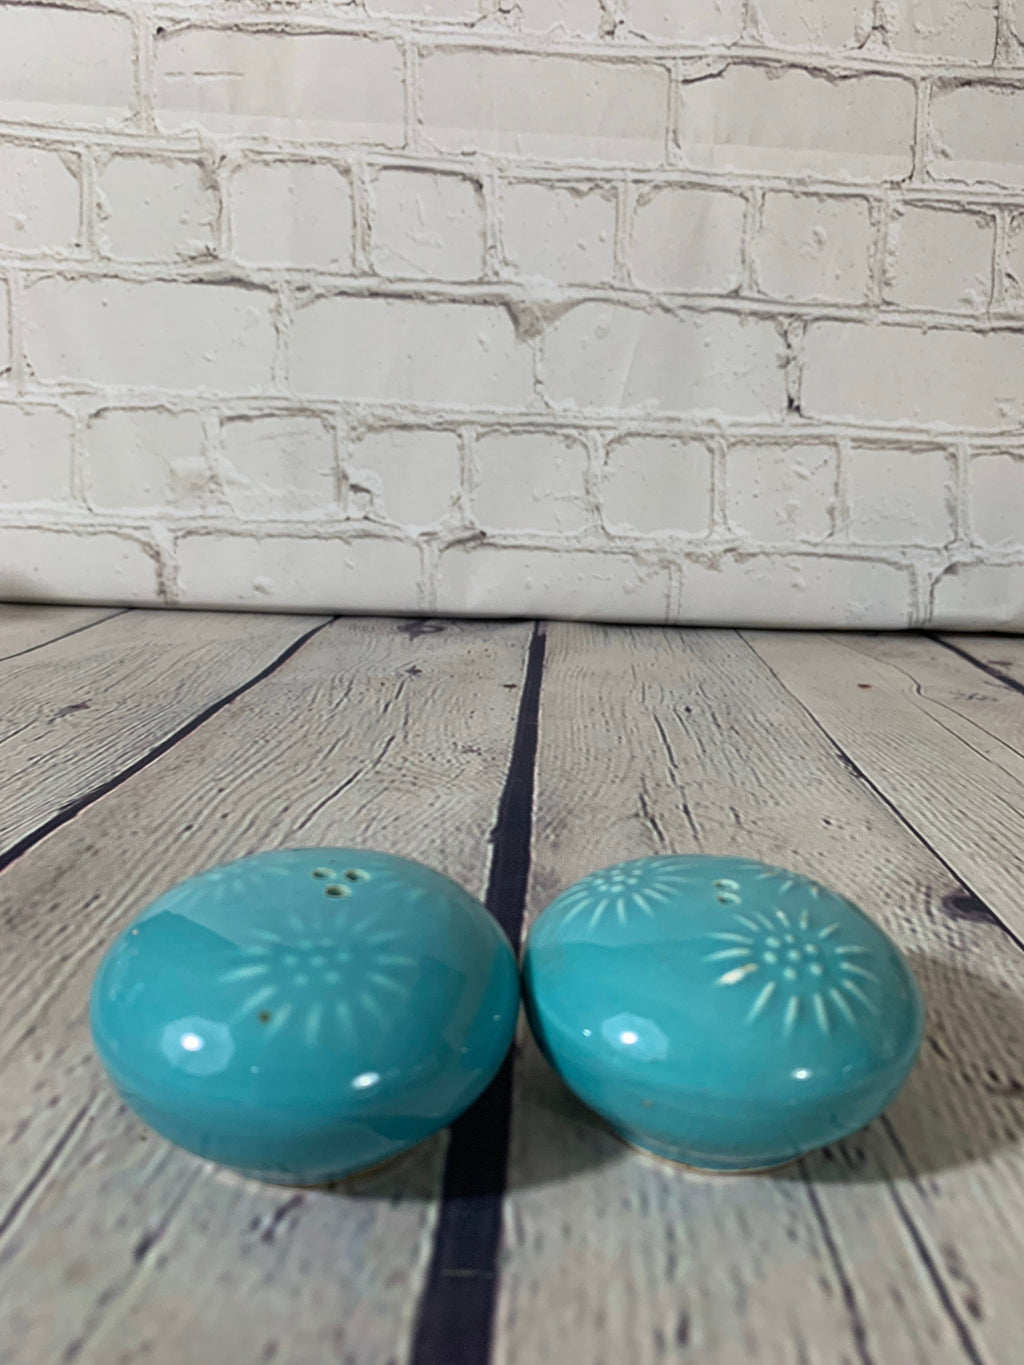 Vintage Ceramic Small Round Turquoise/Aqua Salt & Pepper Shakers -Japan